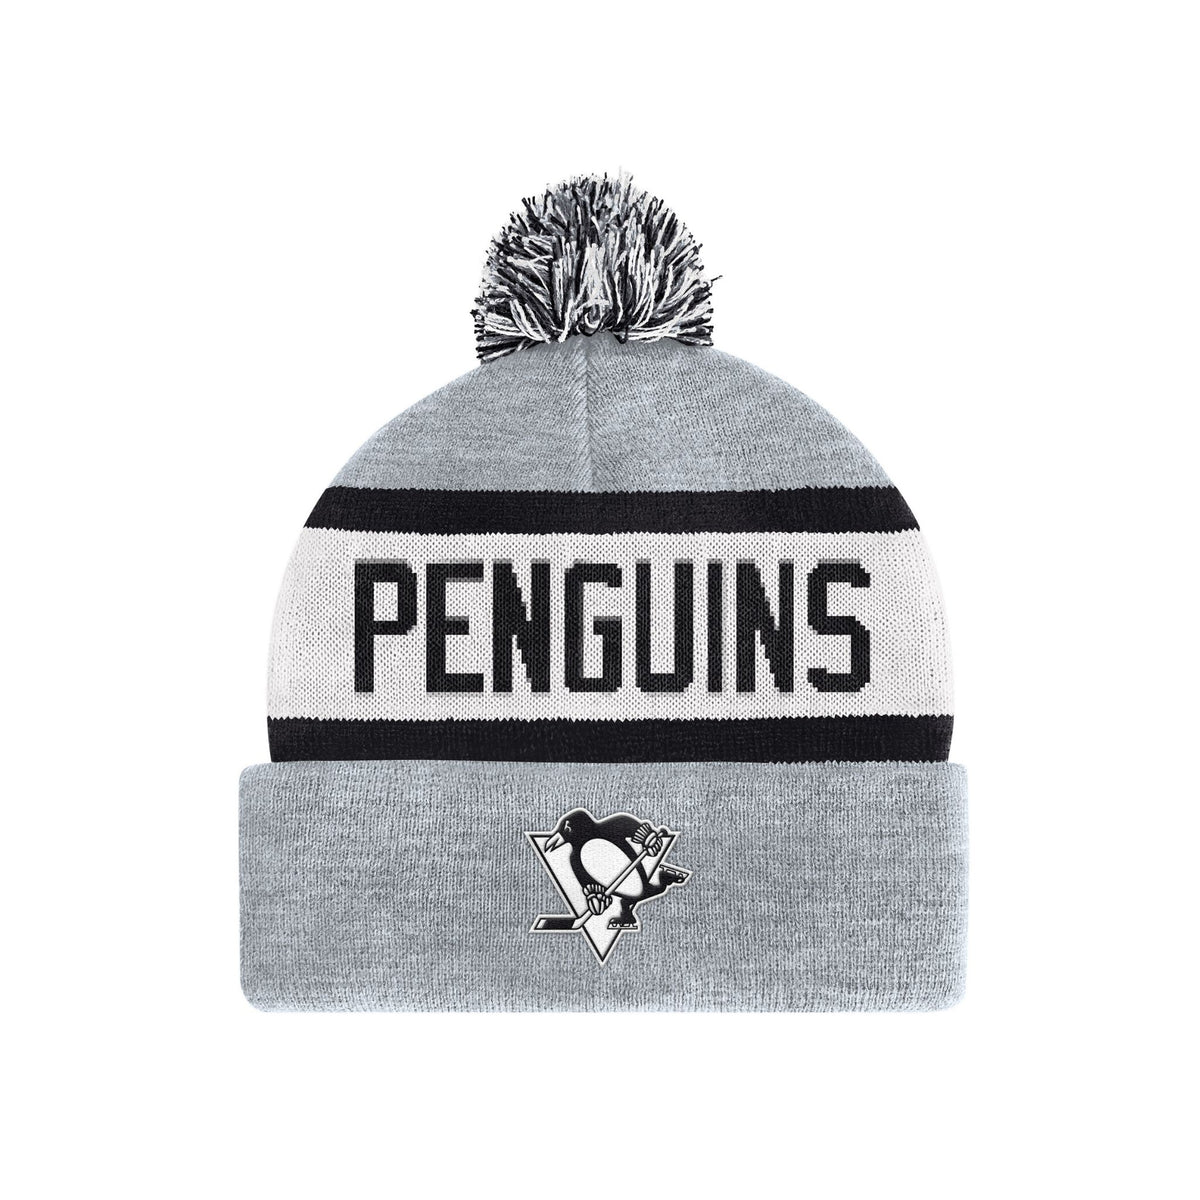 NHL Pittsburgh Penguins Black Ice Beanie